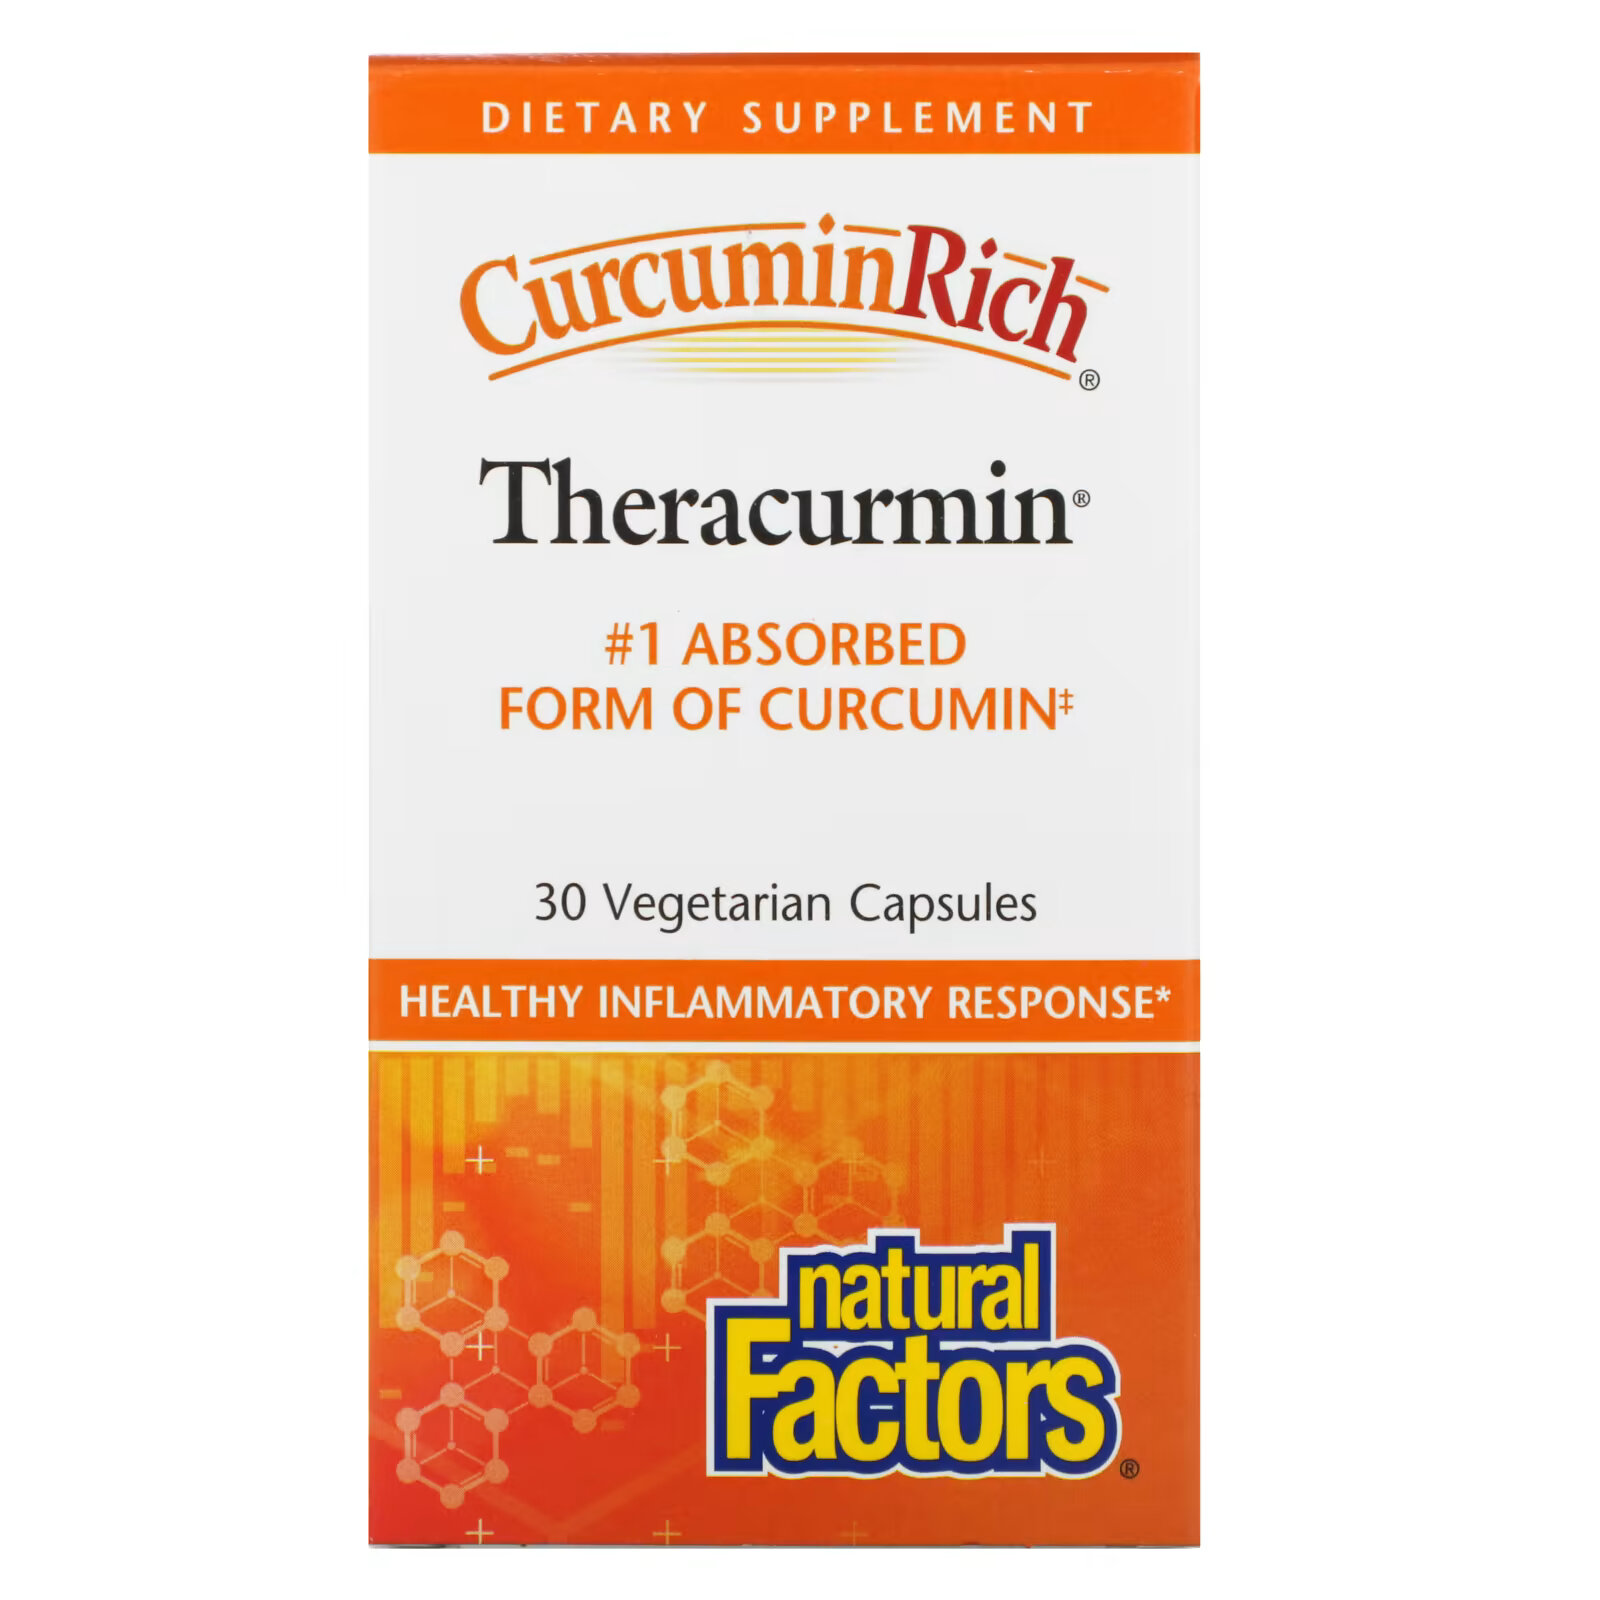 natural factors теракурмин двойная сила действия 30 вегетарианских капсул Natural Factors, CurcuminRich, Theracurmin, куркумин, 30 вегетарианских капсул